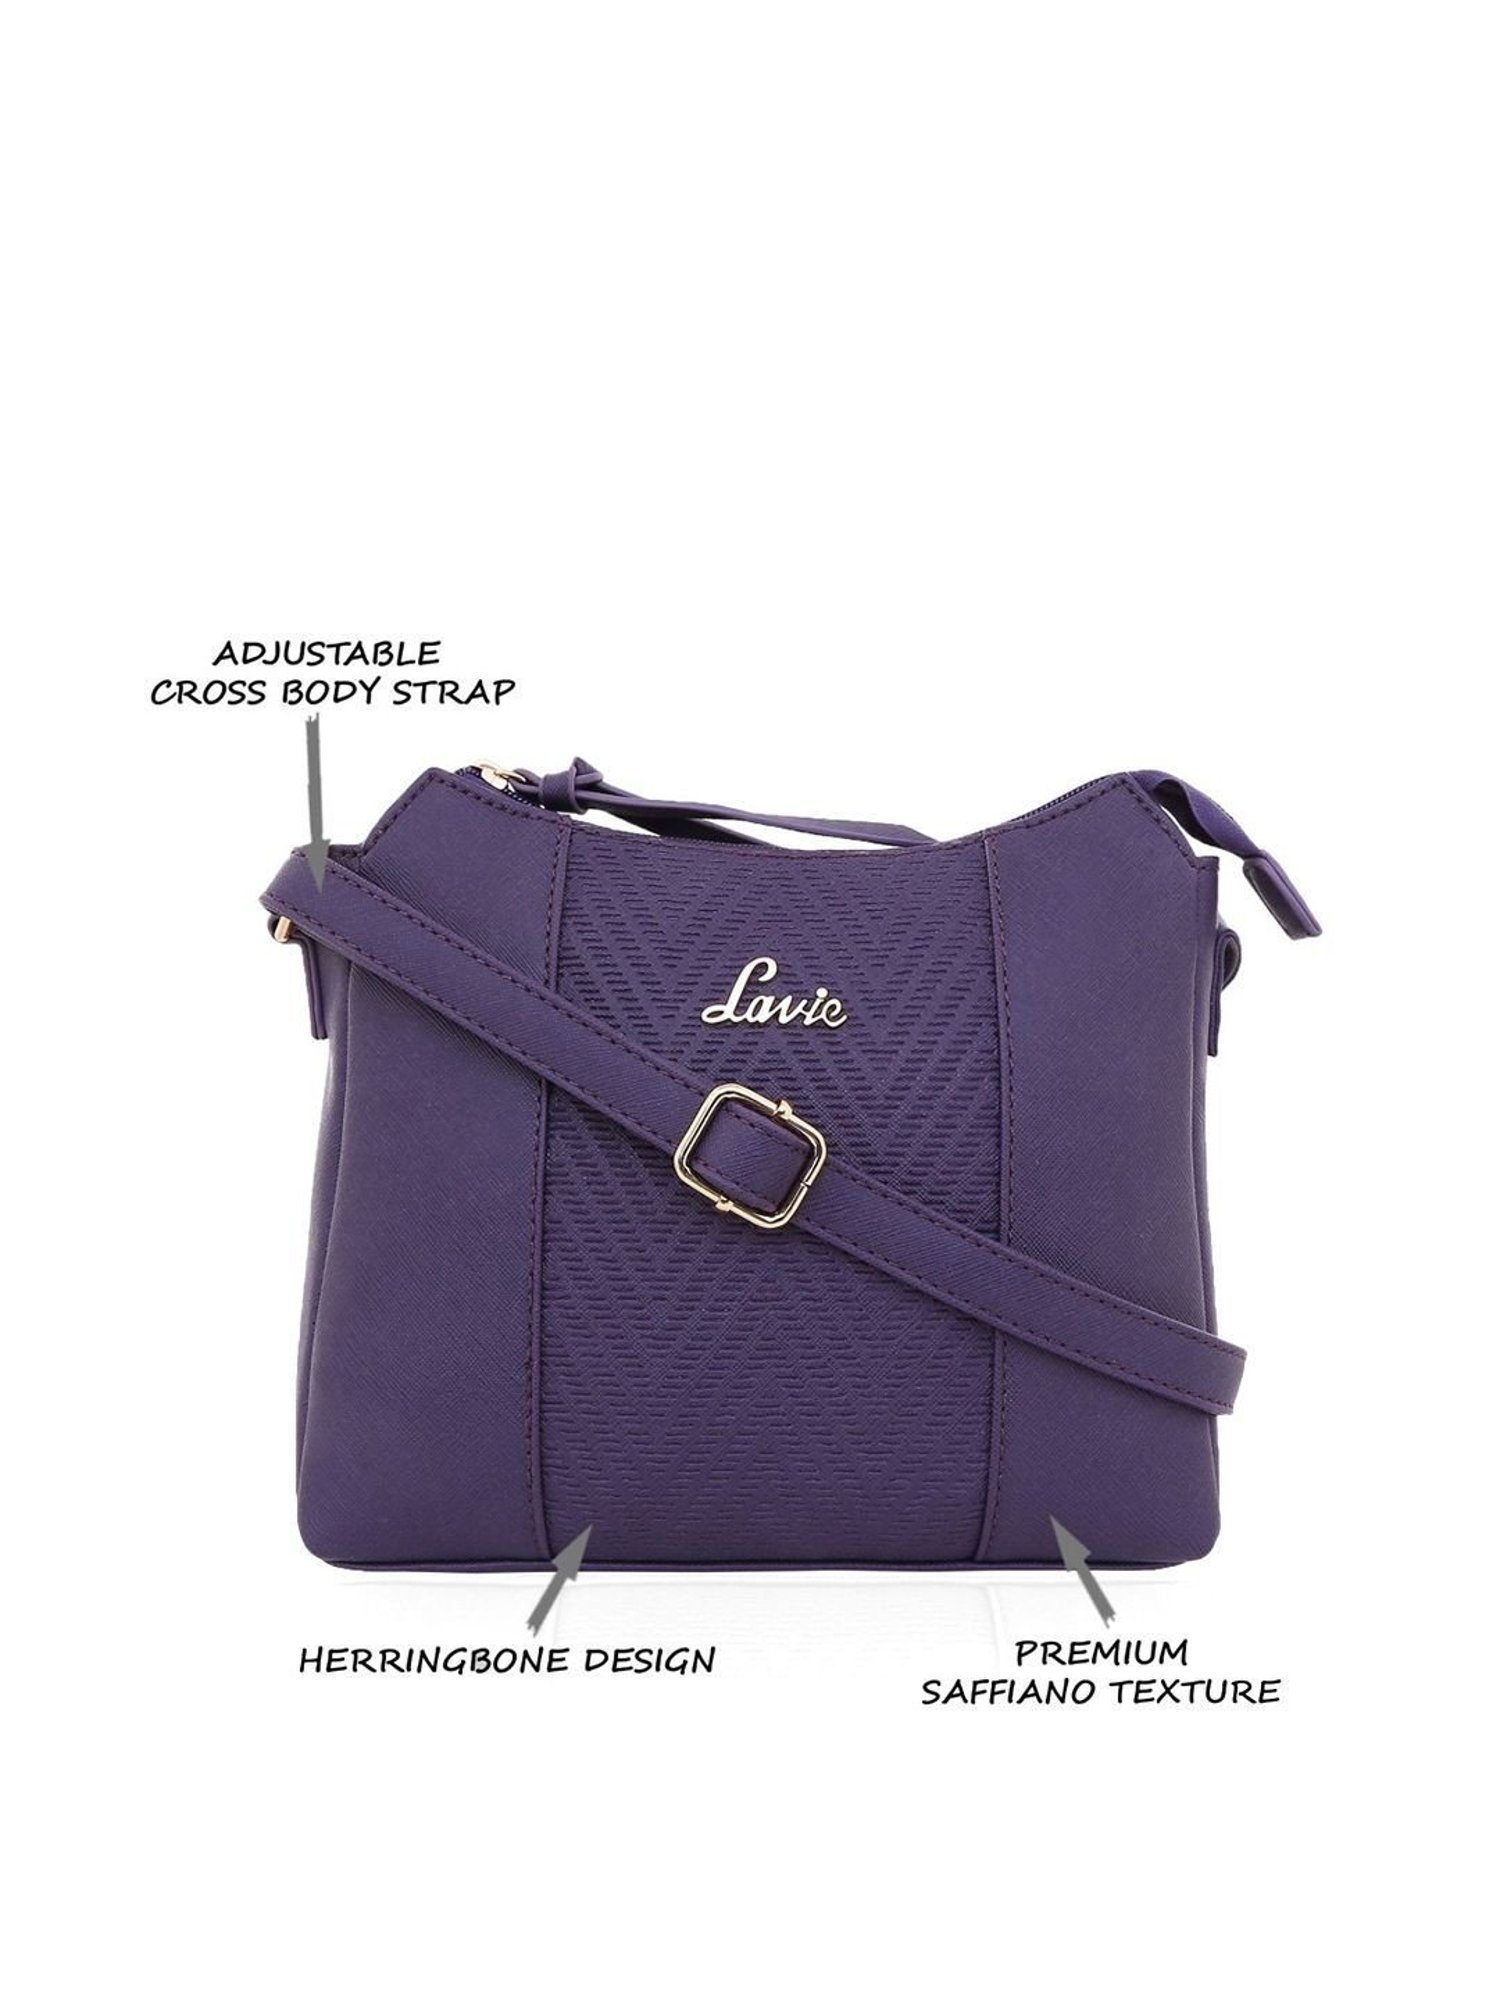 Say “I Do” To New Lavie Handbags This Wedding Season – Lavie World